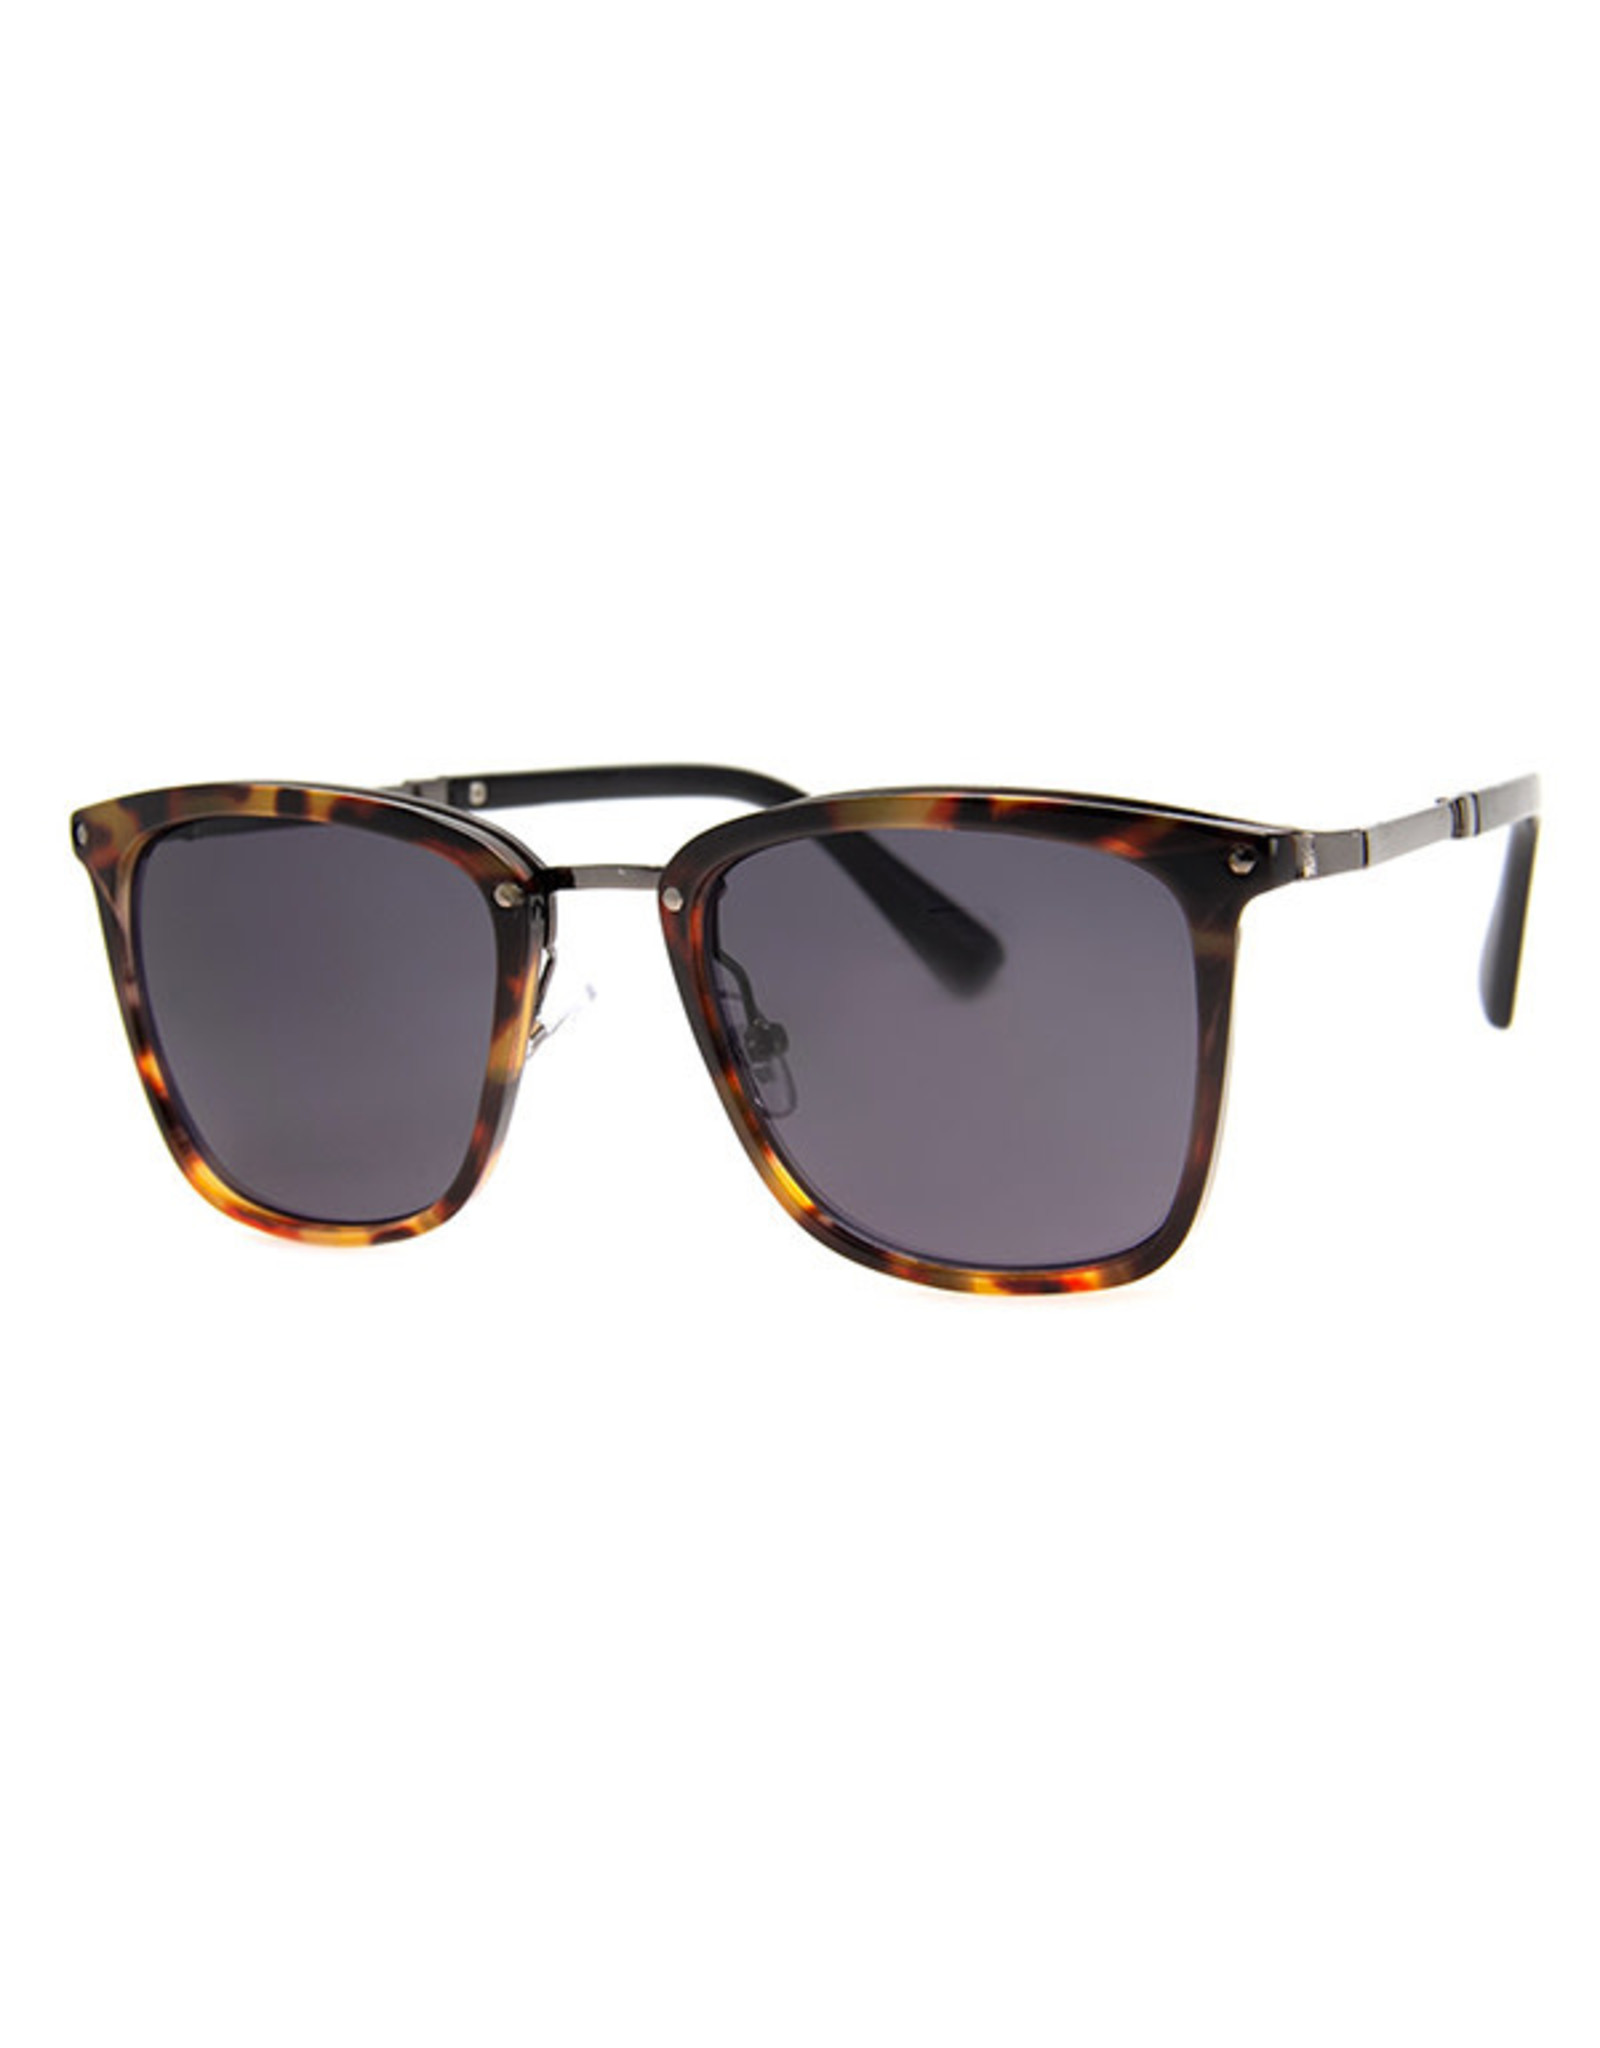 AJM - Rectangle Frame Sunglasses / Black or Tortoise